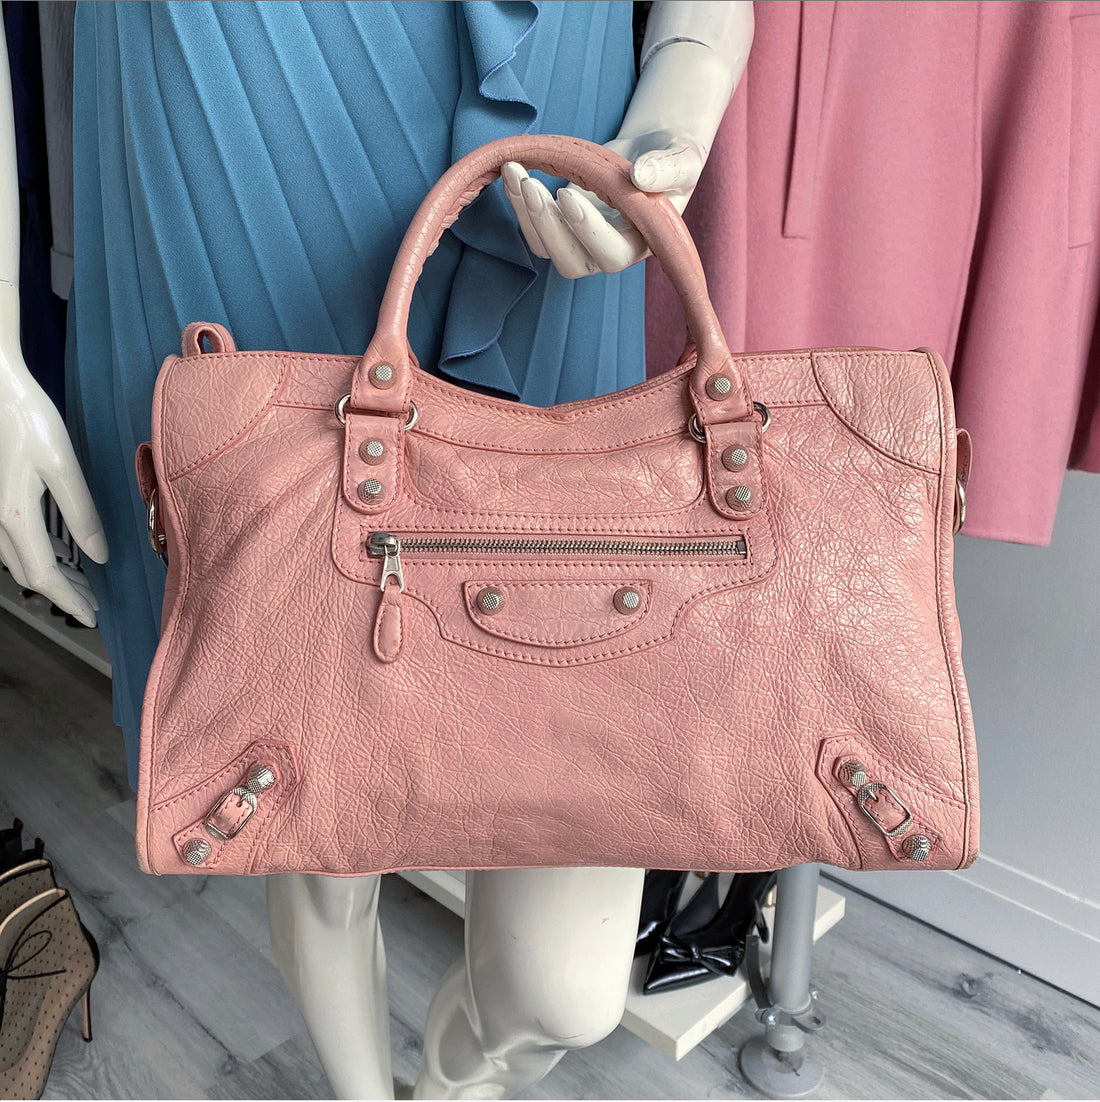 Balenciaga Pink Leather City Classic Medium Bag – I MISS YOU VINTAGE